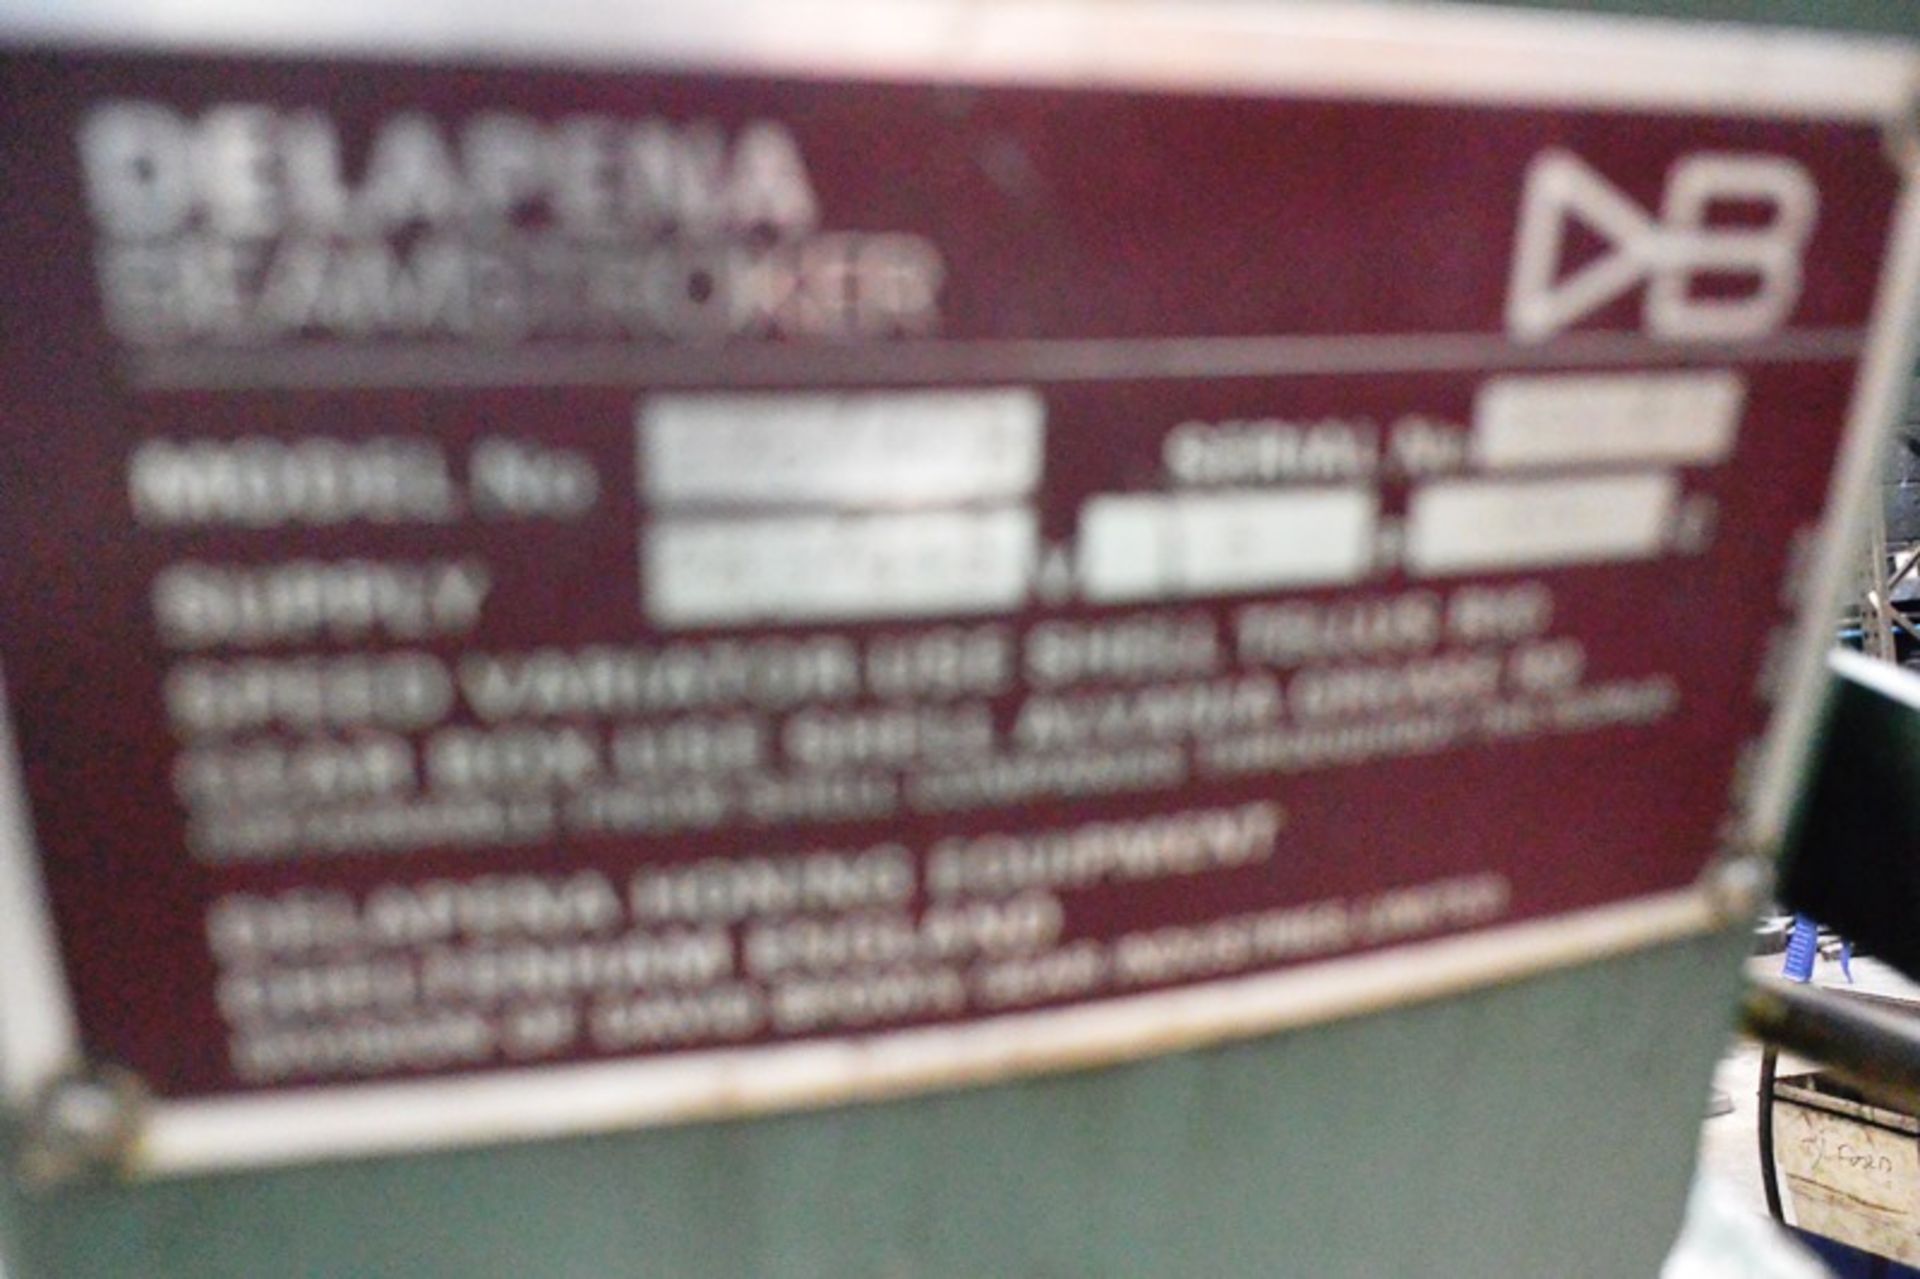 Delapena Auto stroker vertical honing machine, model Beam Stroker 276 / 403, serial no. 290 193, 3 - Image 4 of 7